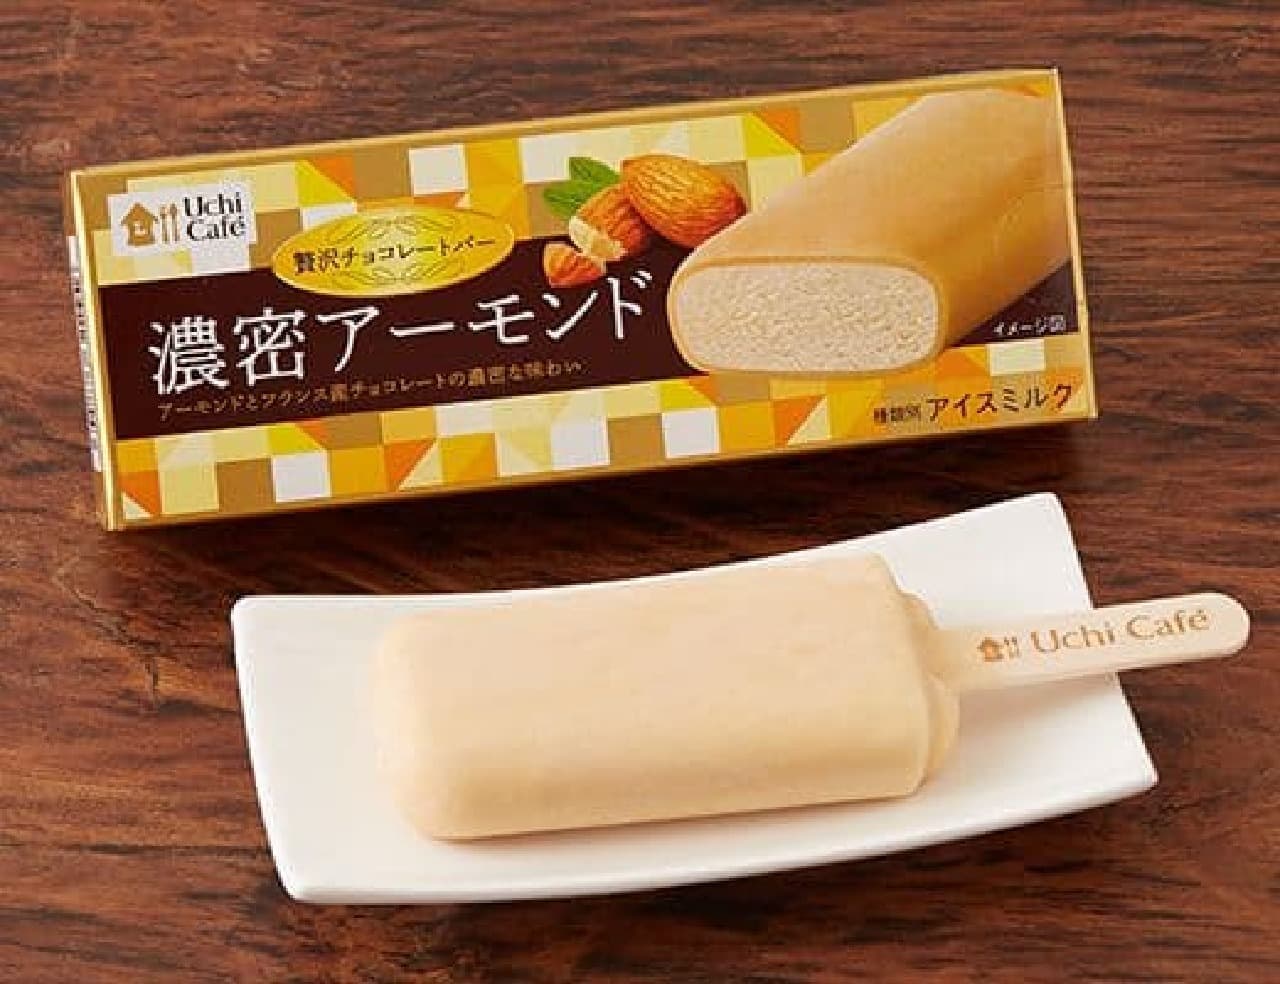 Lawson "Uchi Cafe Luxury Chocolate Bar Dense Almond 70ml"